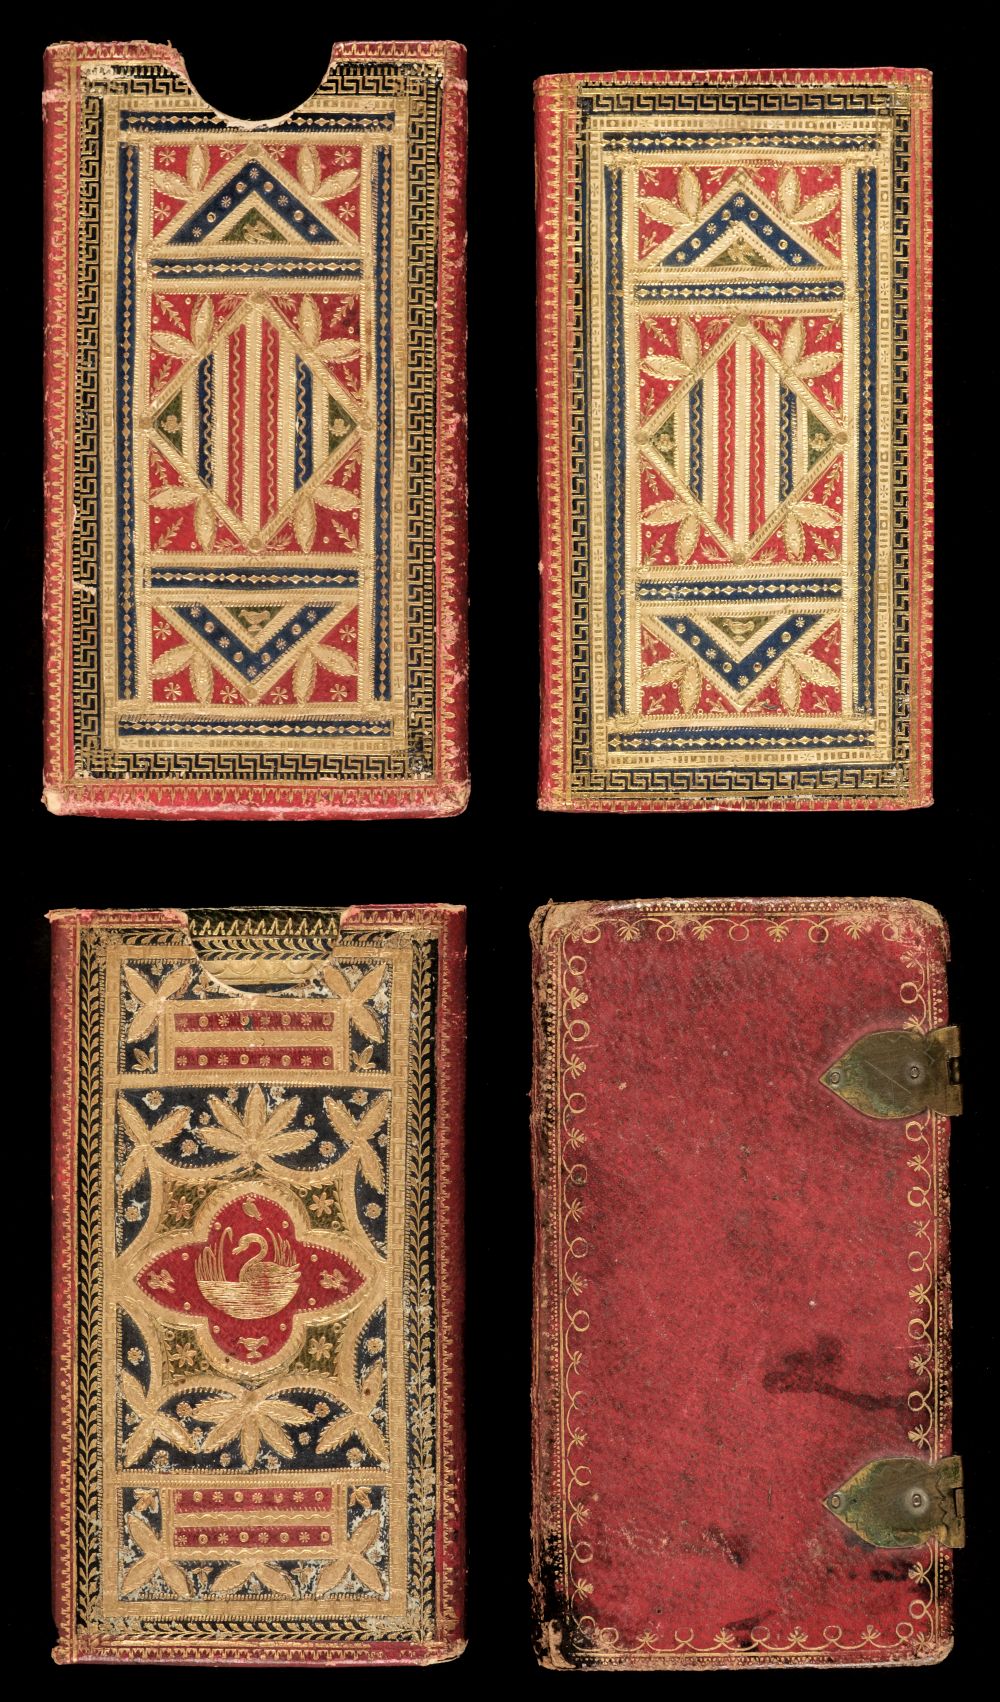 Miniature almanacks. Goldsmith. An Almanack for the Year... M.DCC.XCIII, by John Goldsmith & 2